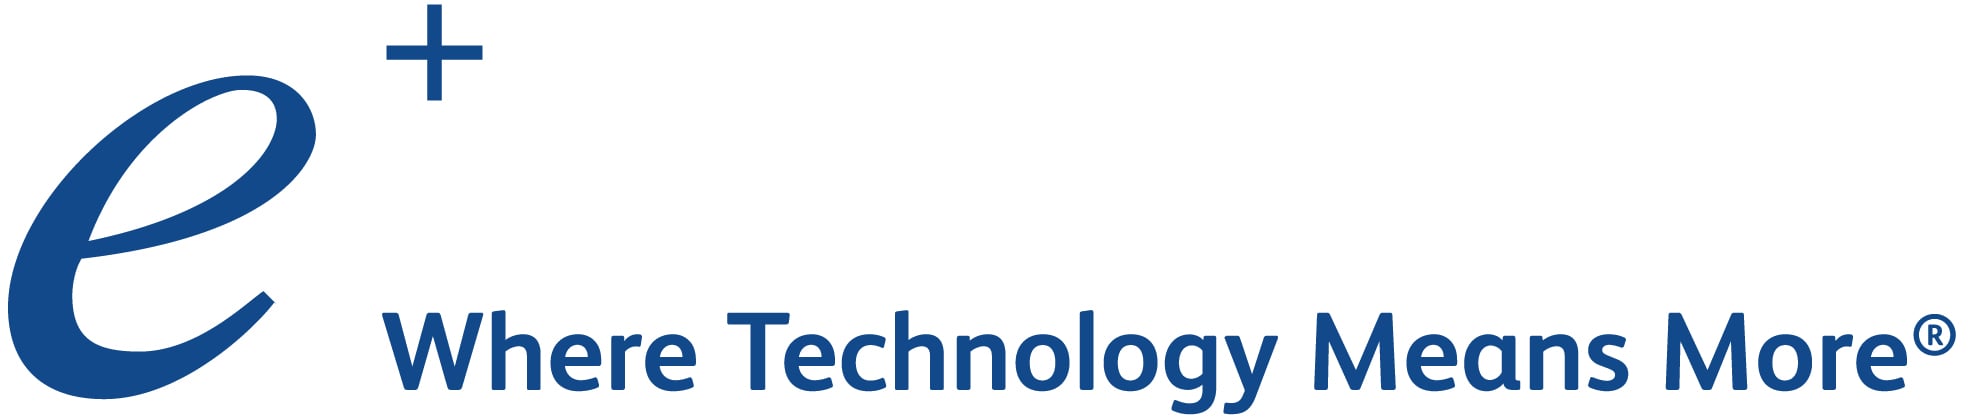 ePlus-logo-preferred-COLOR-Mar-23-2021-09-09-21-76-PM